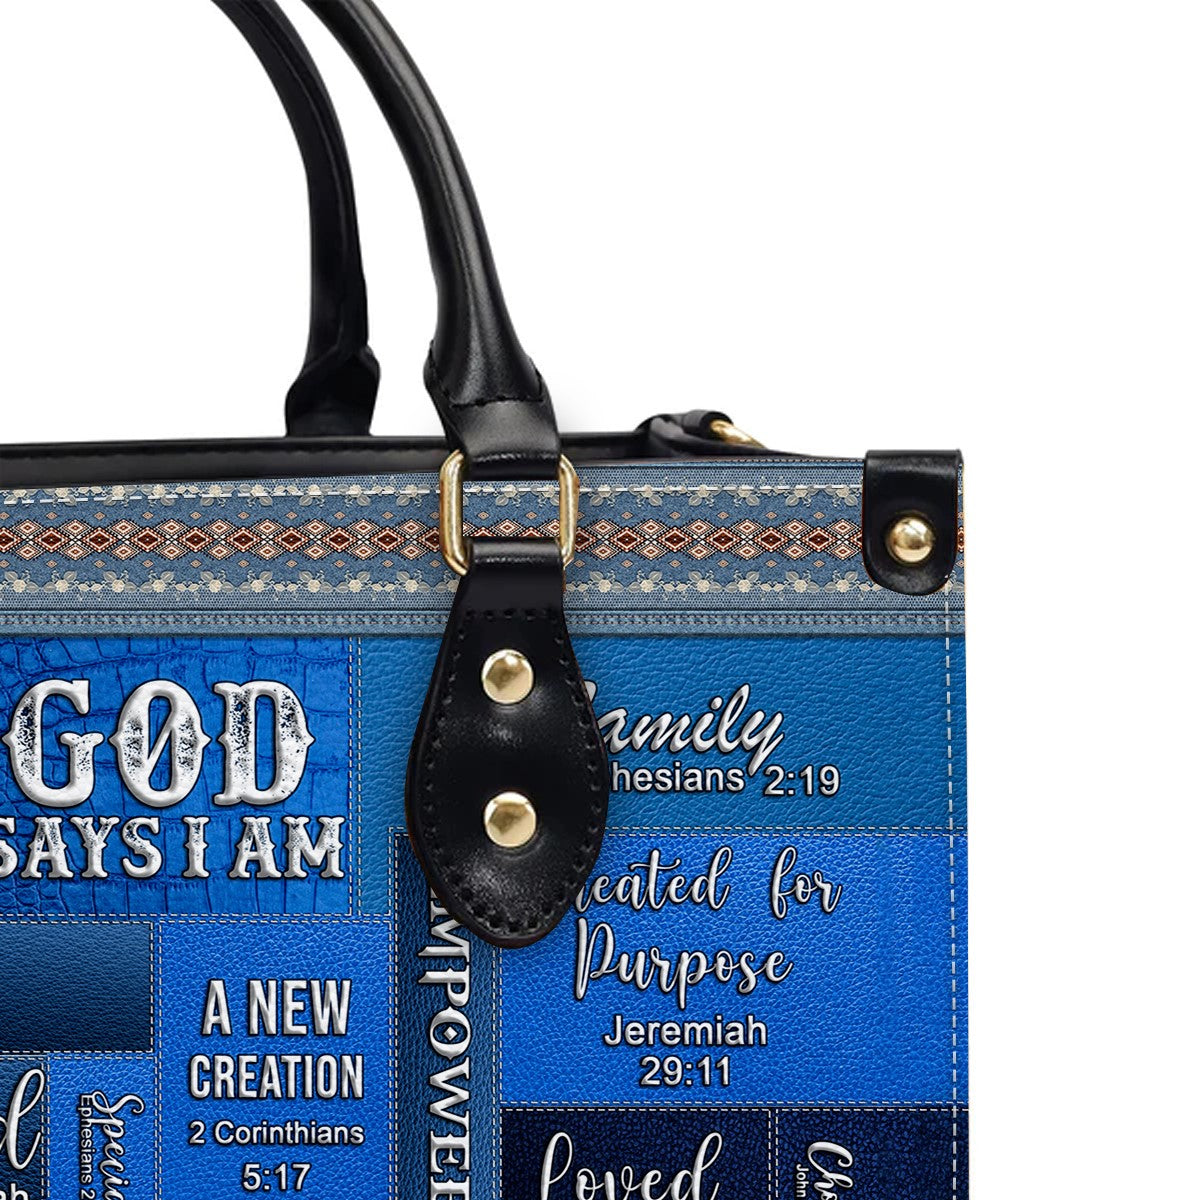 Christianartbag Handbags, God Says I Am Leather Handbag Blue, Personalized Bags, Gifts for Women, Christmas Gift, CABLTB05240923.